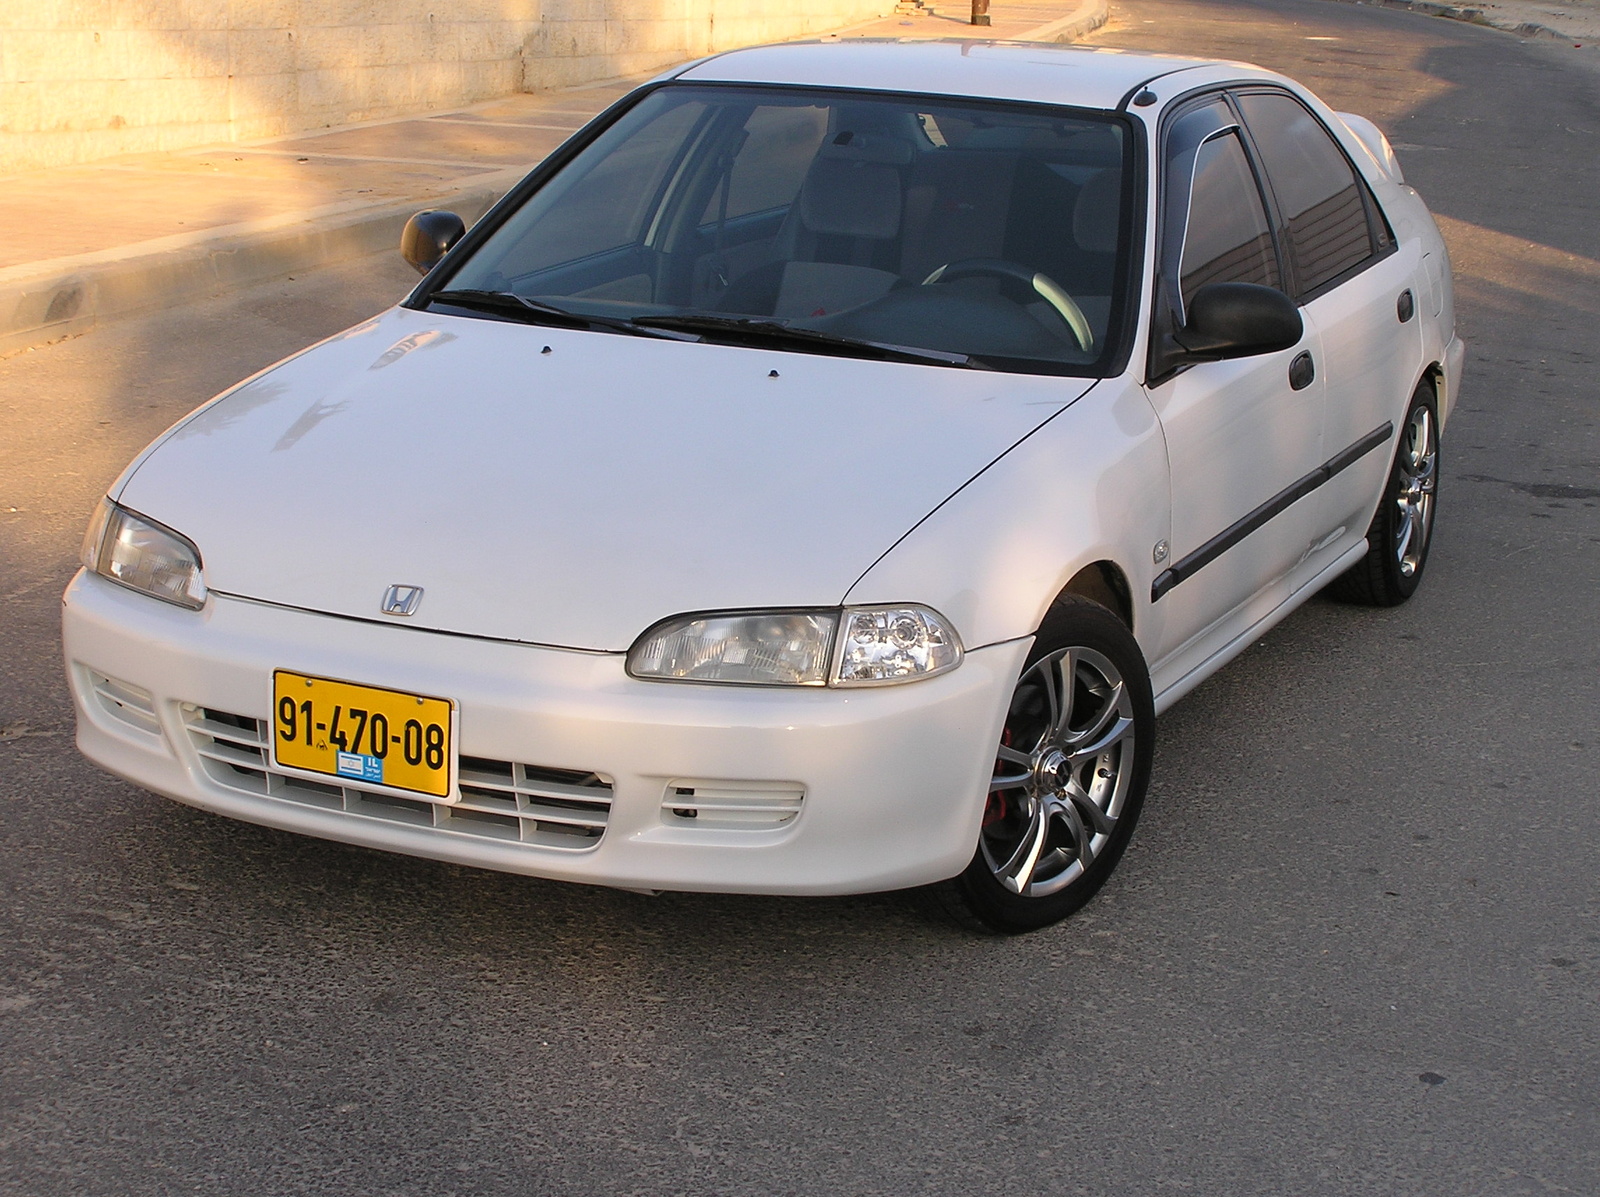 1994 Honda civic dx coupe wiki #2